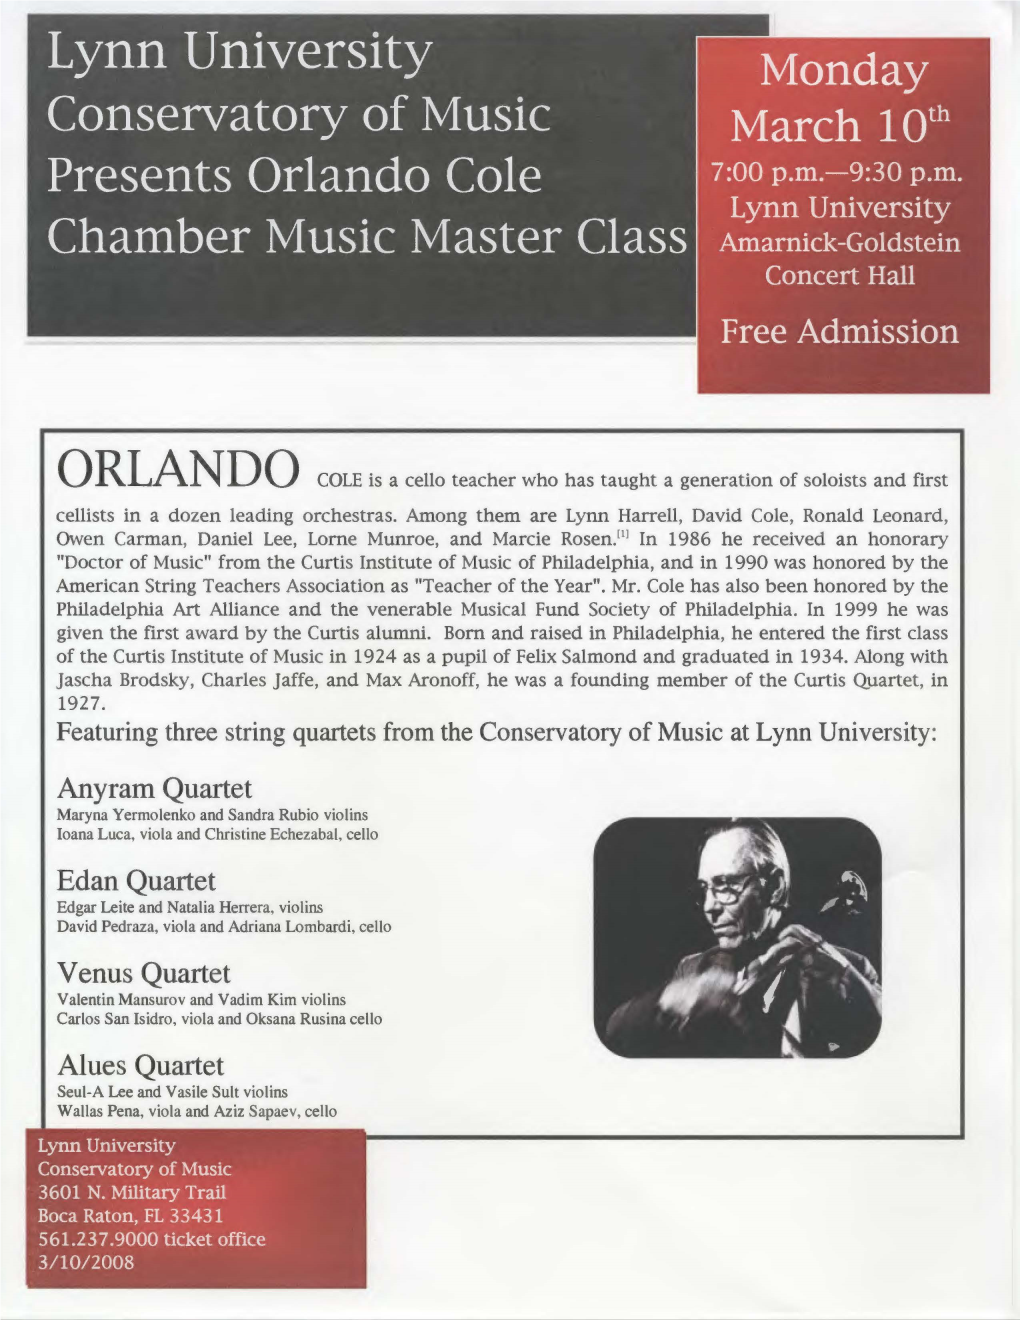 2007-2008 Master Class-Orlando Cole (Chamber Music)